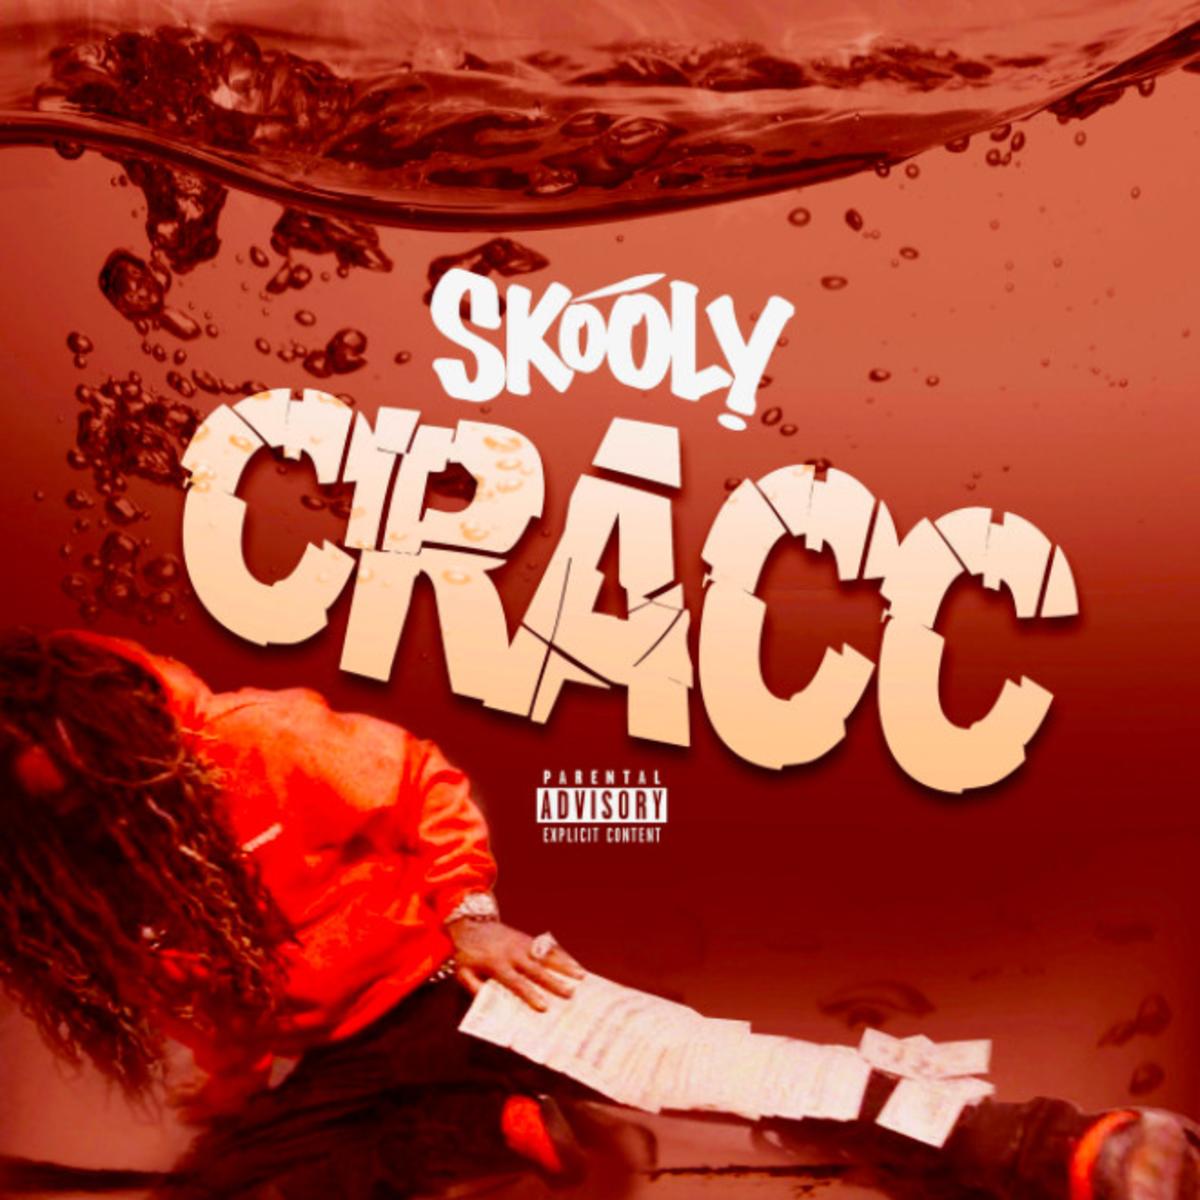 DOWNLOAD MP3: Skooly - Cracc